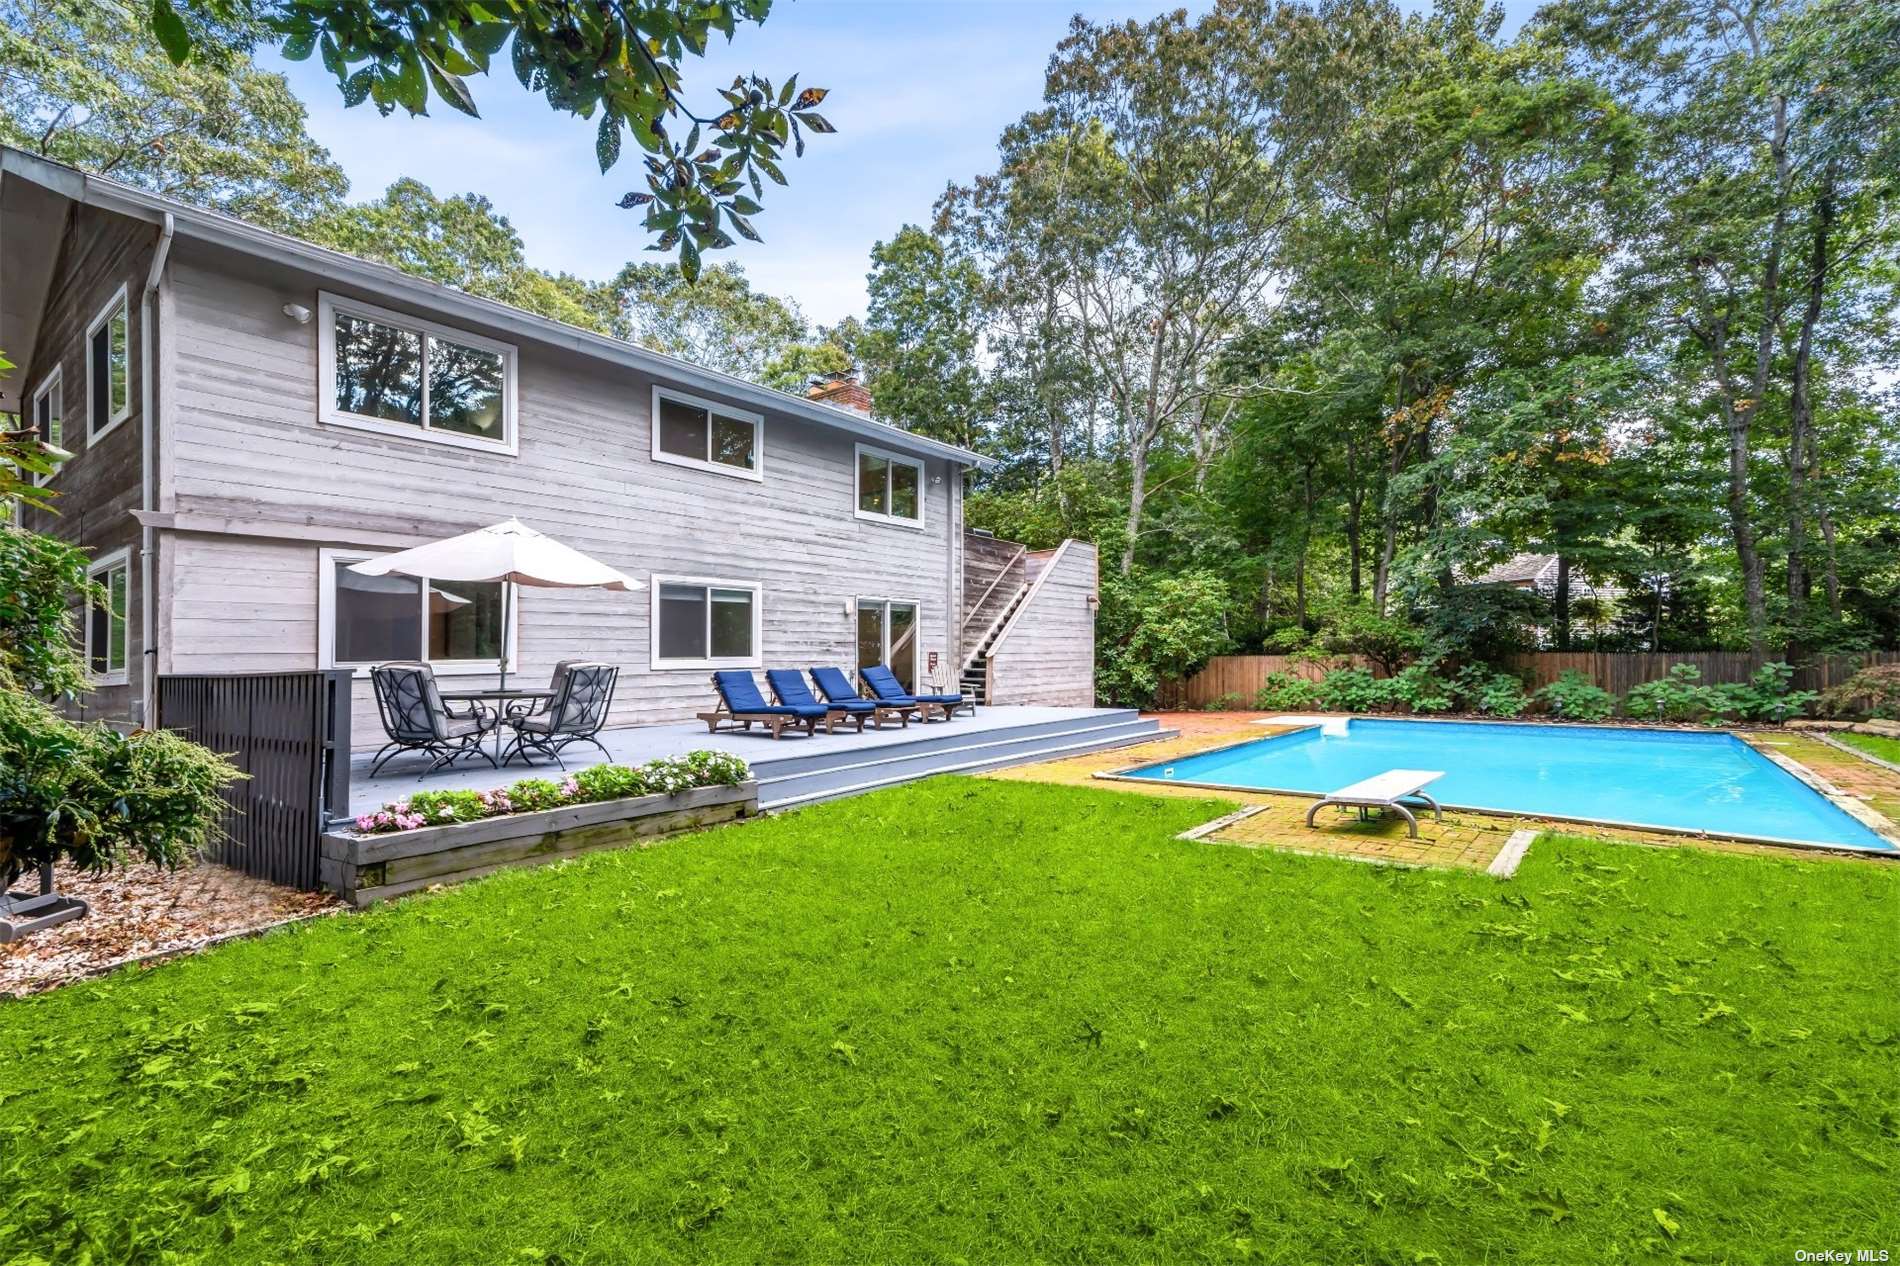 Rental Property at 4 Underwood Drive, East Hampton, Hamptons, NY - Bedrooms: 4 
Bathrooms: 2  - $65,000 MO.